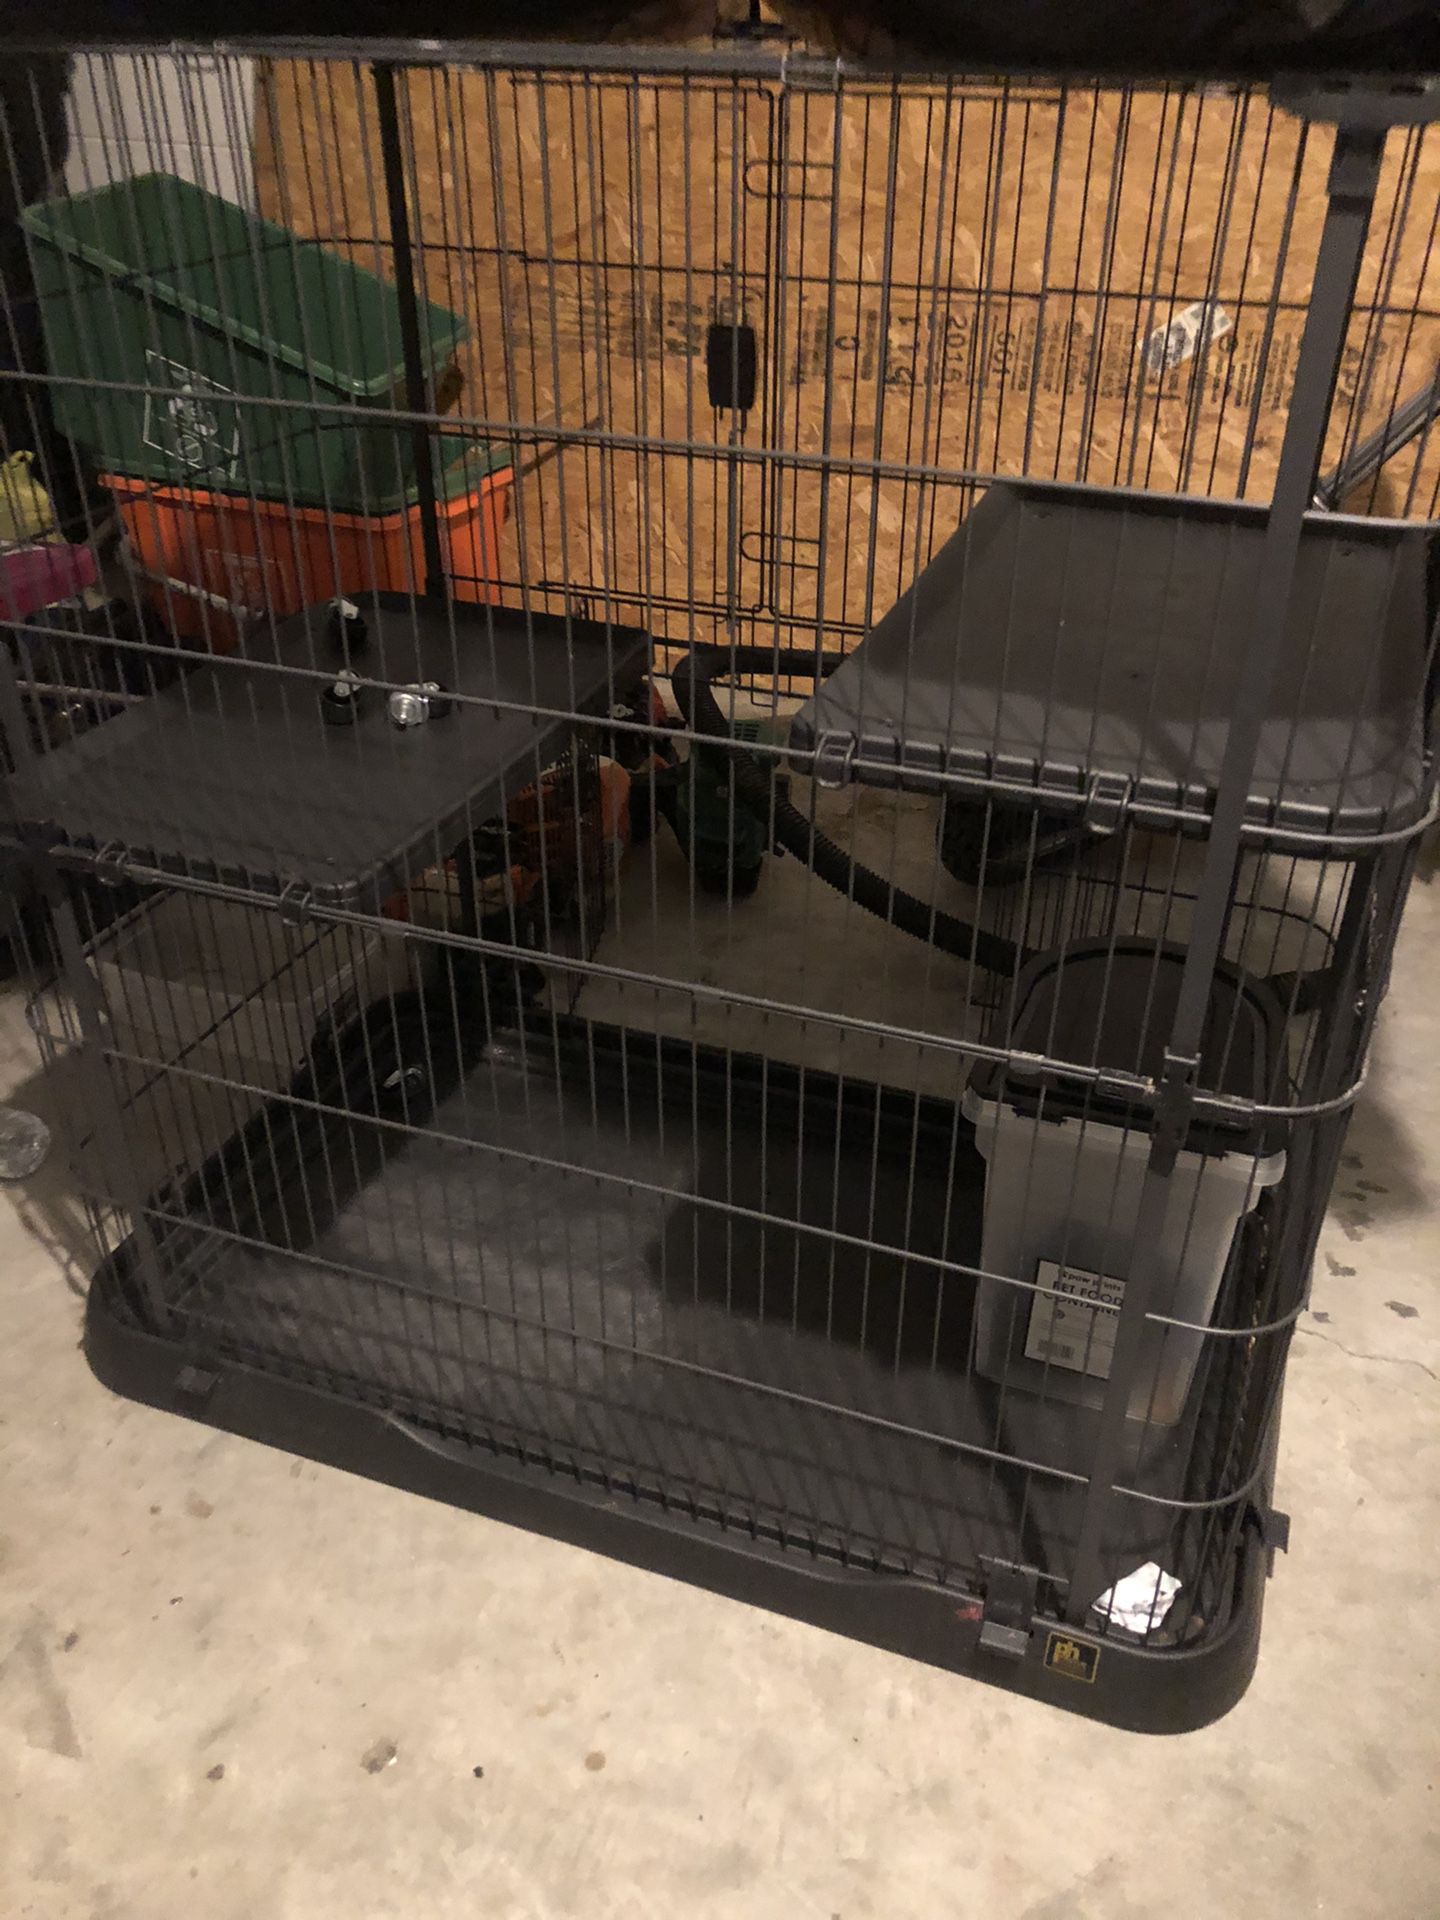 Pet crate nice big space dog cat etc cage